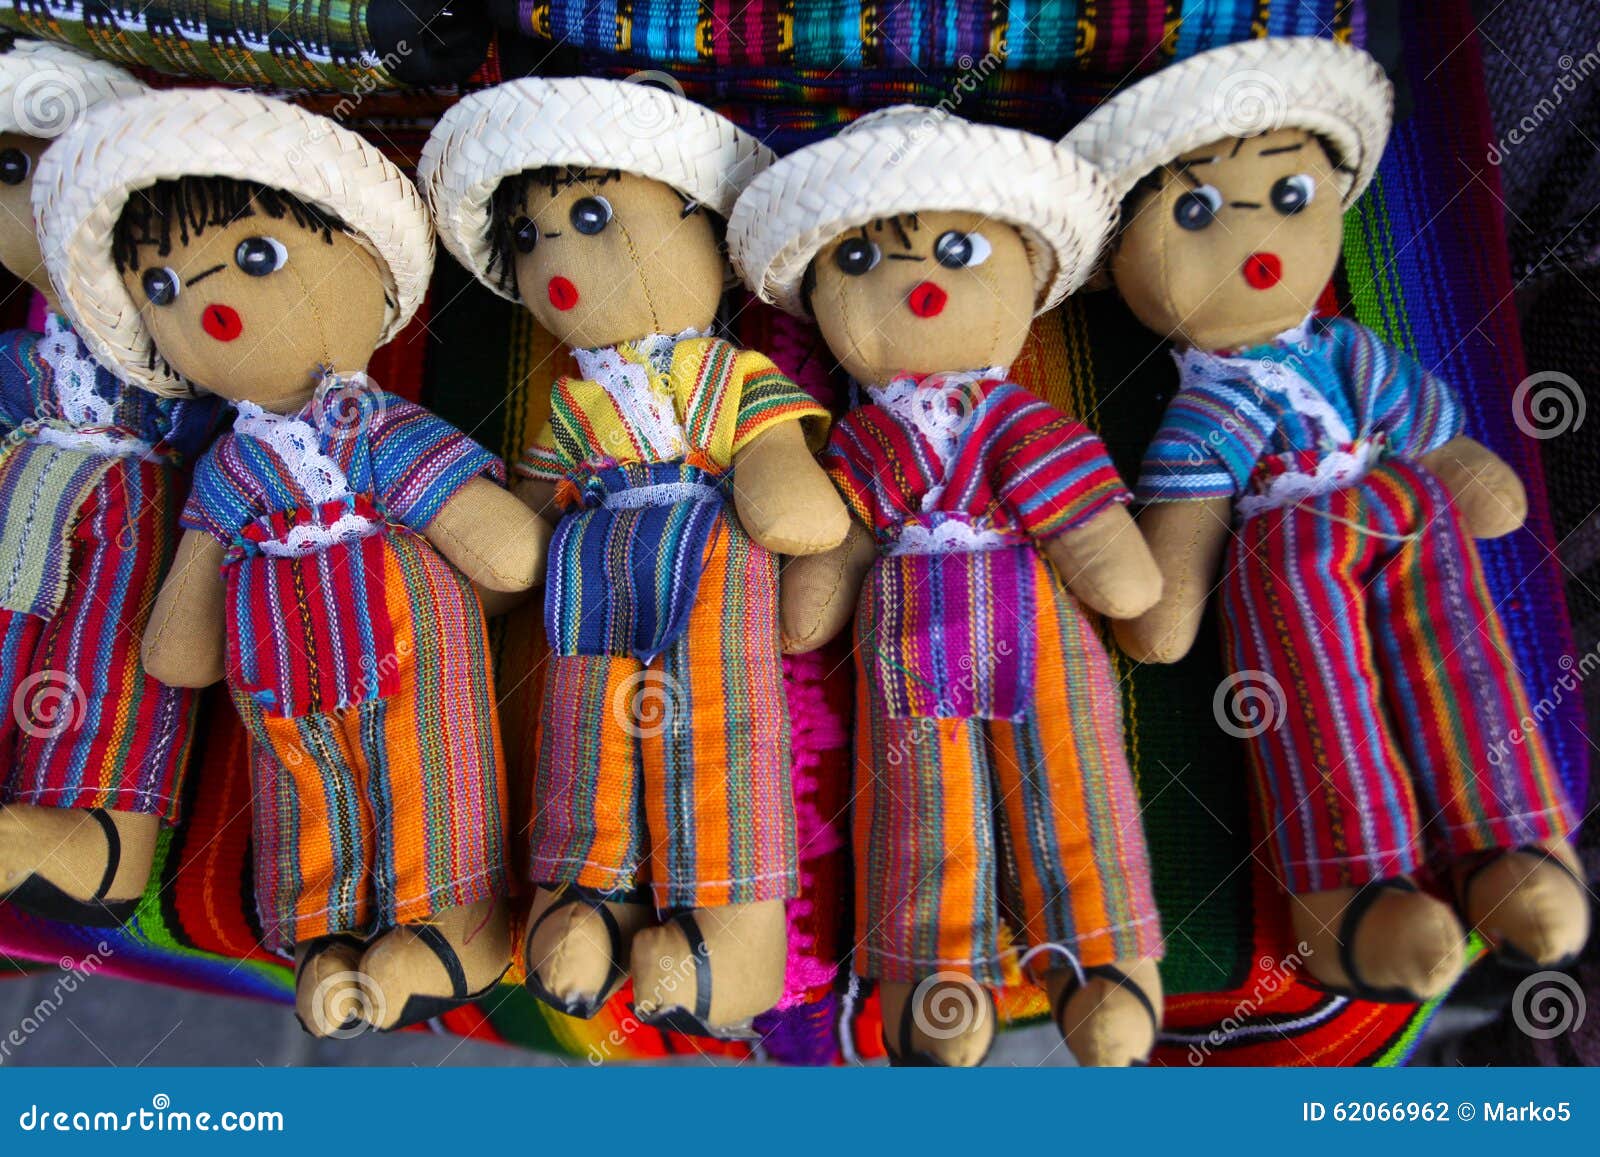 guatemalan worry dolls